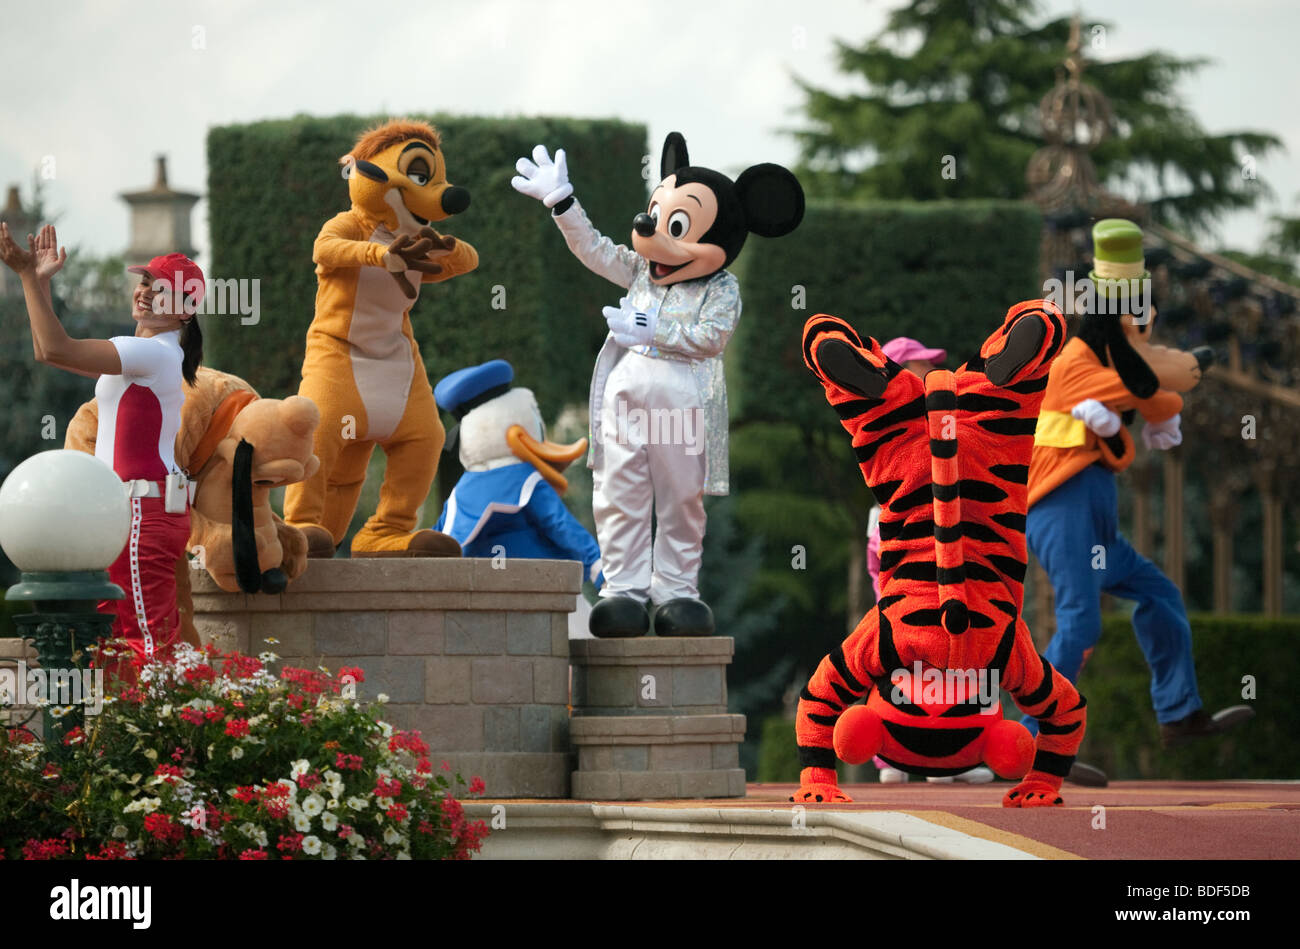 Disney Characters in costume, Disneyland, Paris, France, Europe Stock Photo